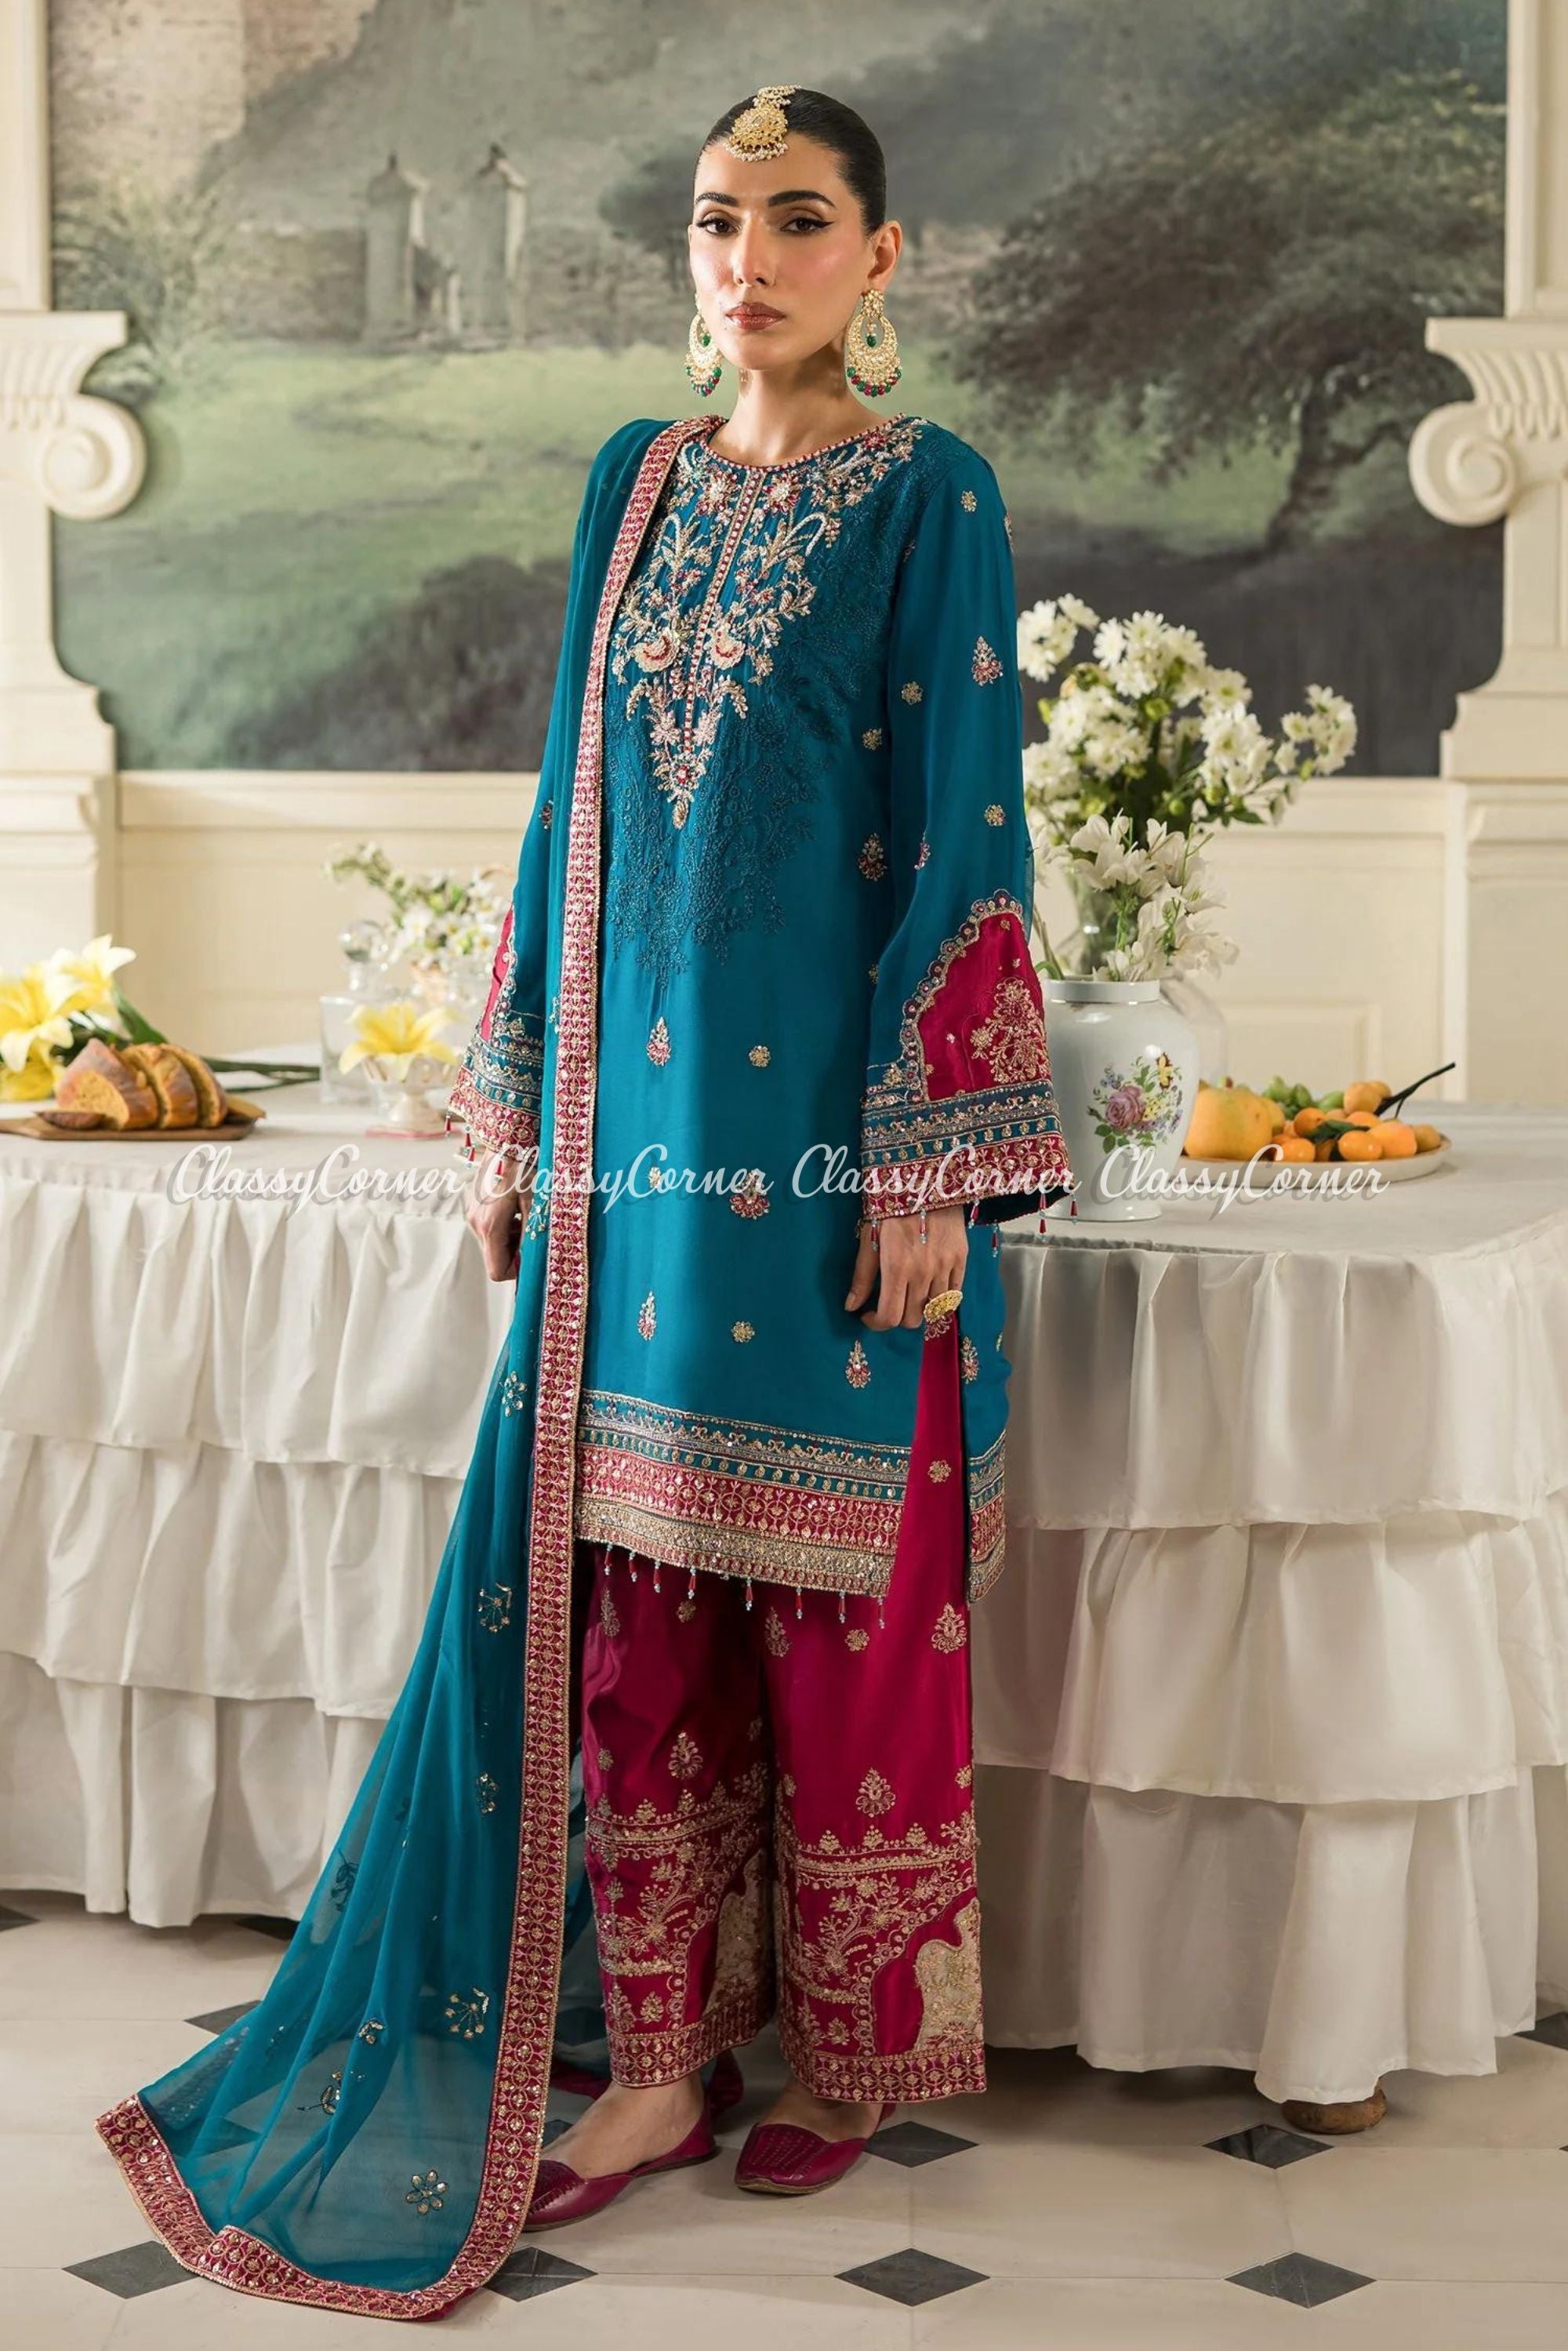 Best Pakistani Wedding Outfits Sydney